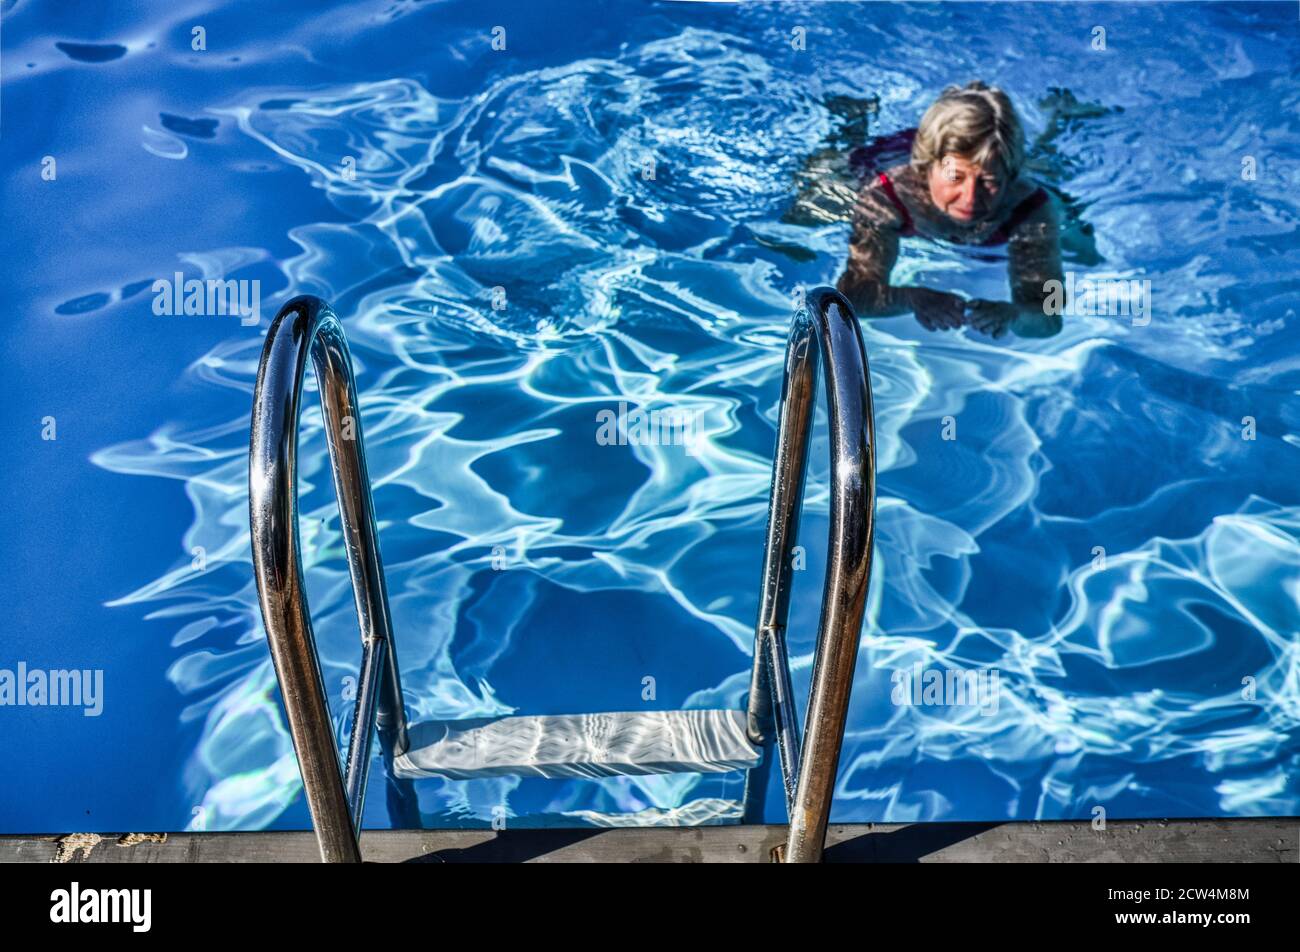 Woman swimming alone in a swimming pool Stock Photo